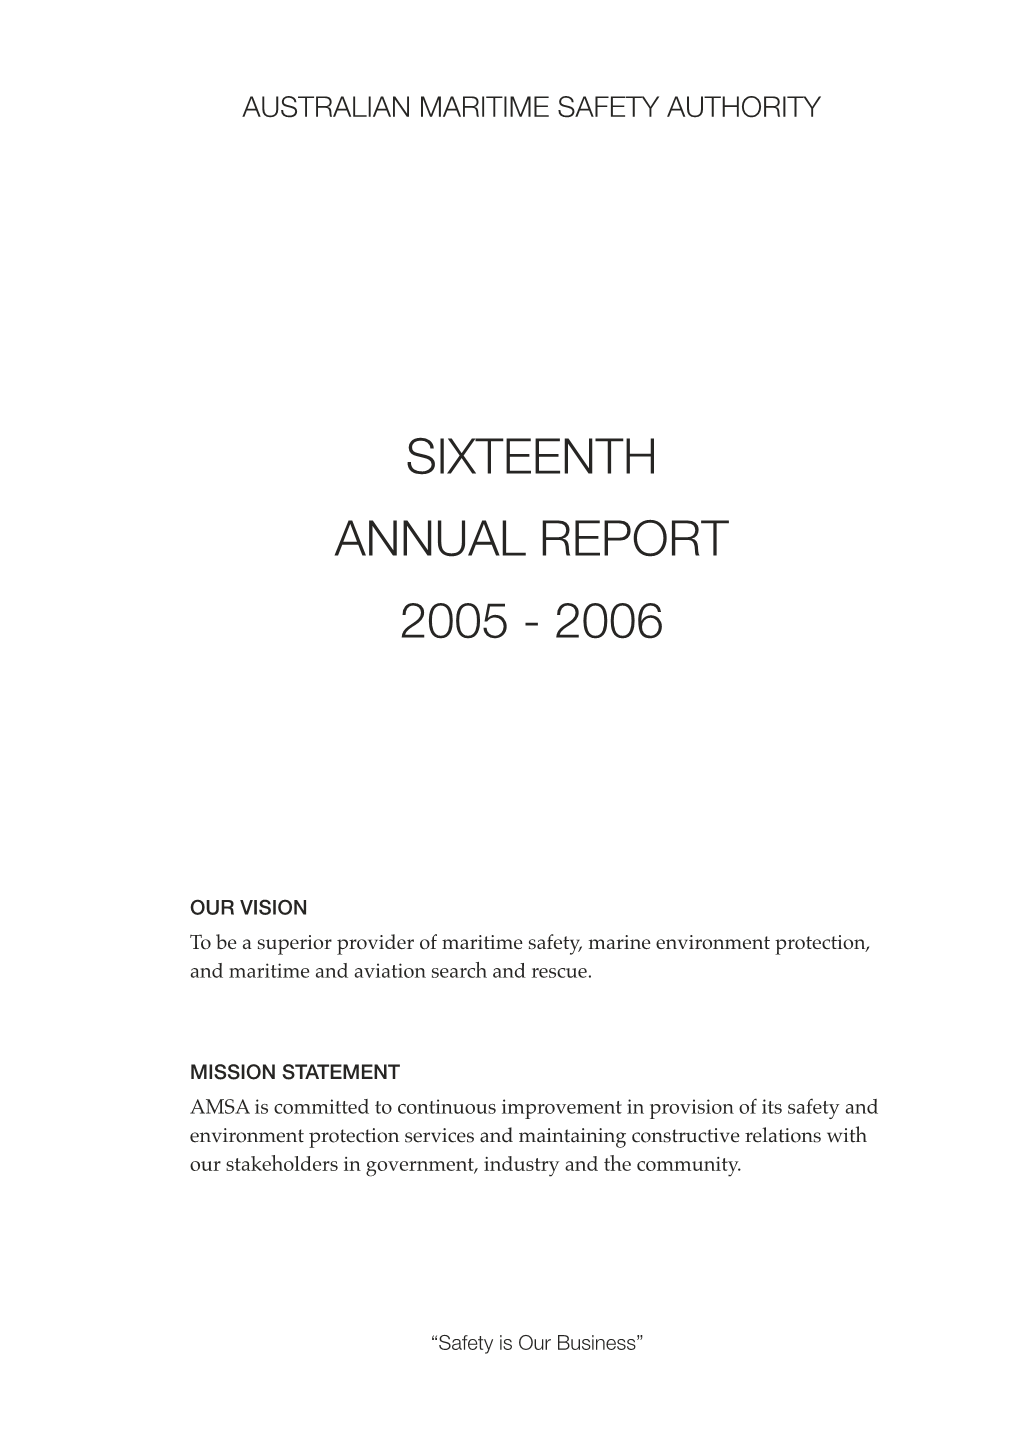 Sixteenth Annual Report 2005 - 2006